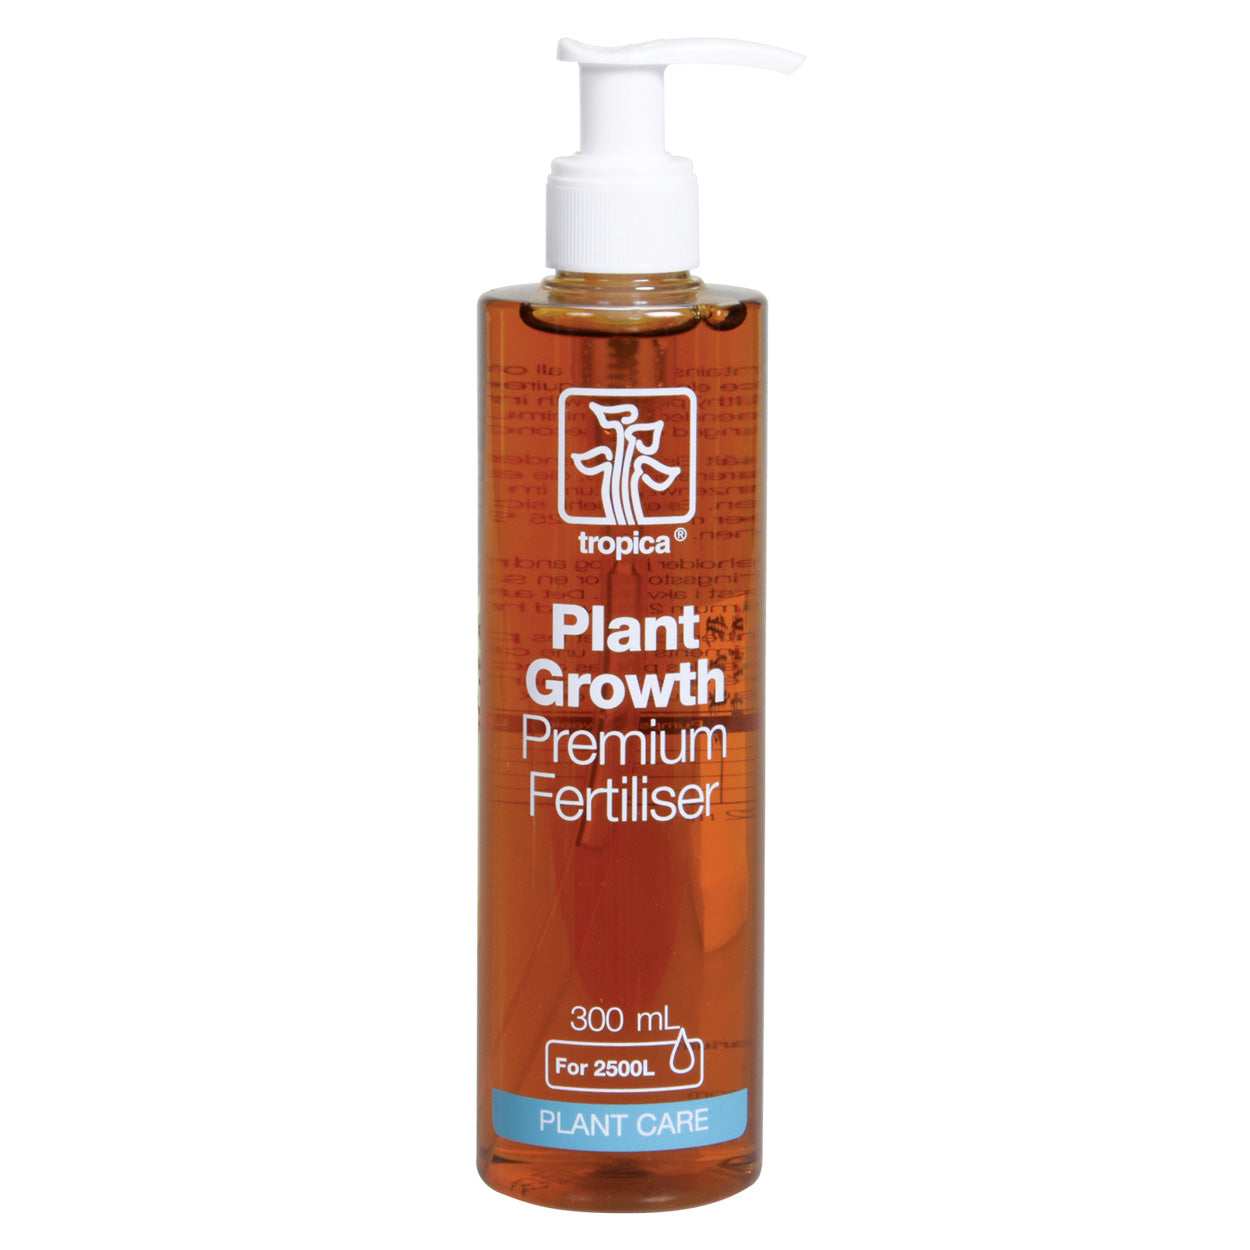 Plant Growth Premium Fertiliser - 300 ml